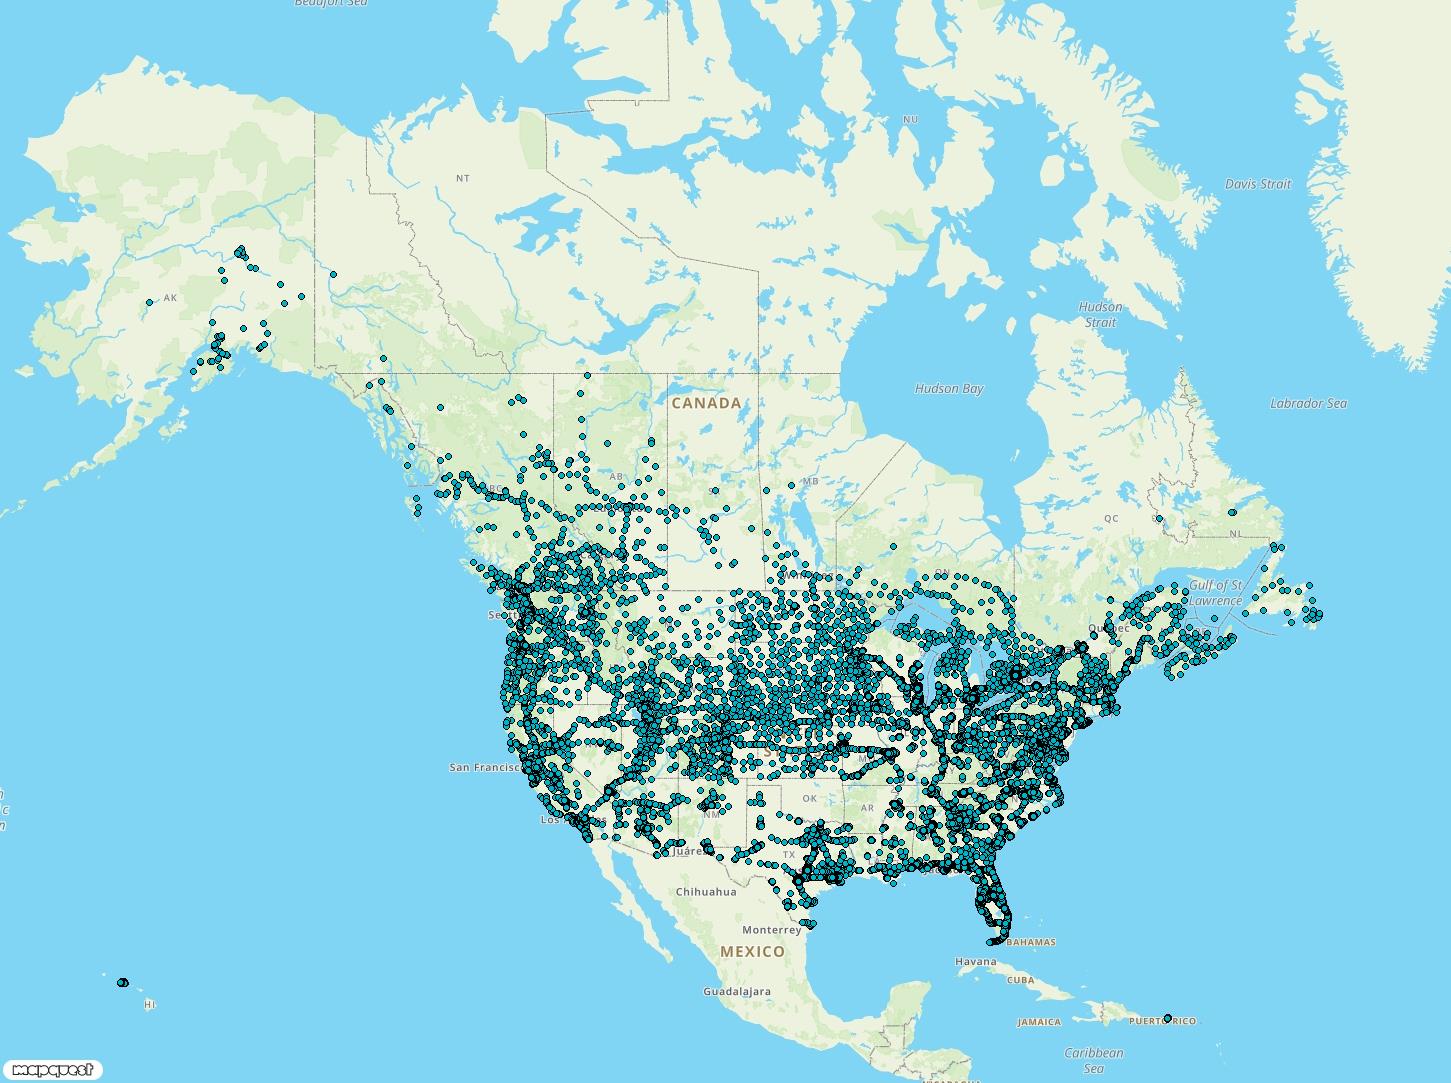 Traffic Camera Coverage Across North America